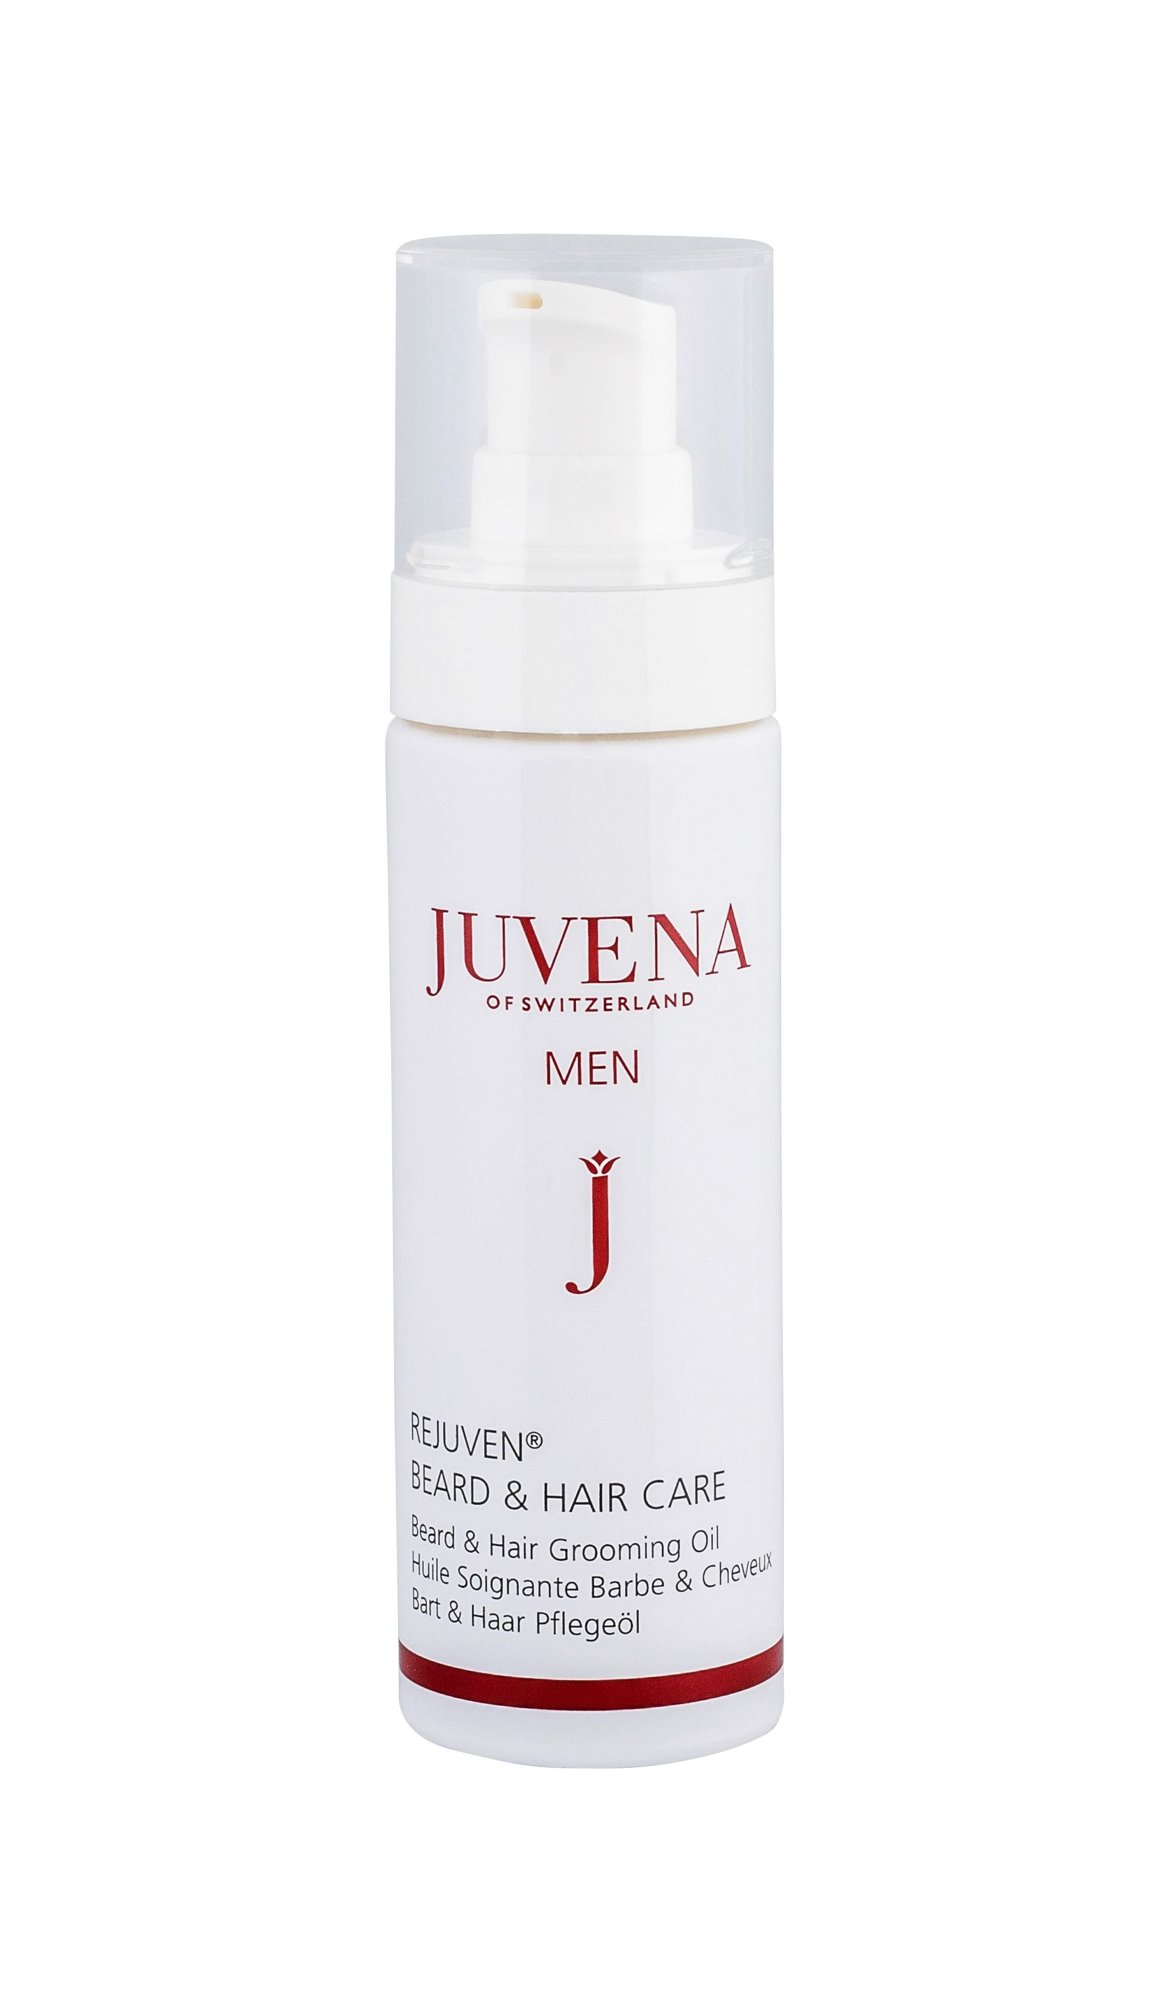 Juvena Rejuven® Men Beard & Hair Grooming Oil barzdos aliejus